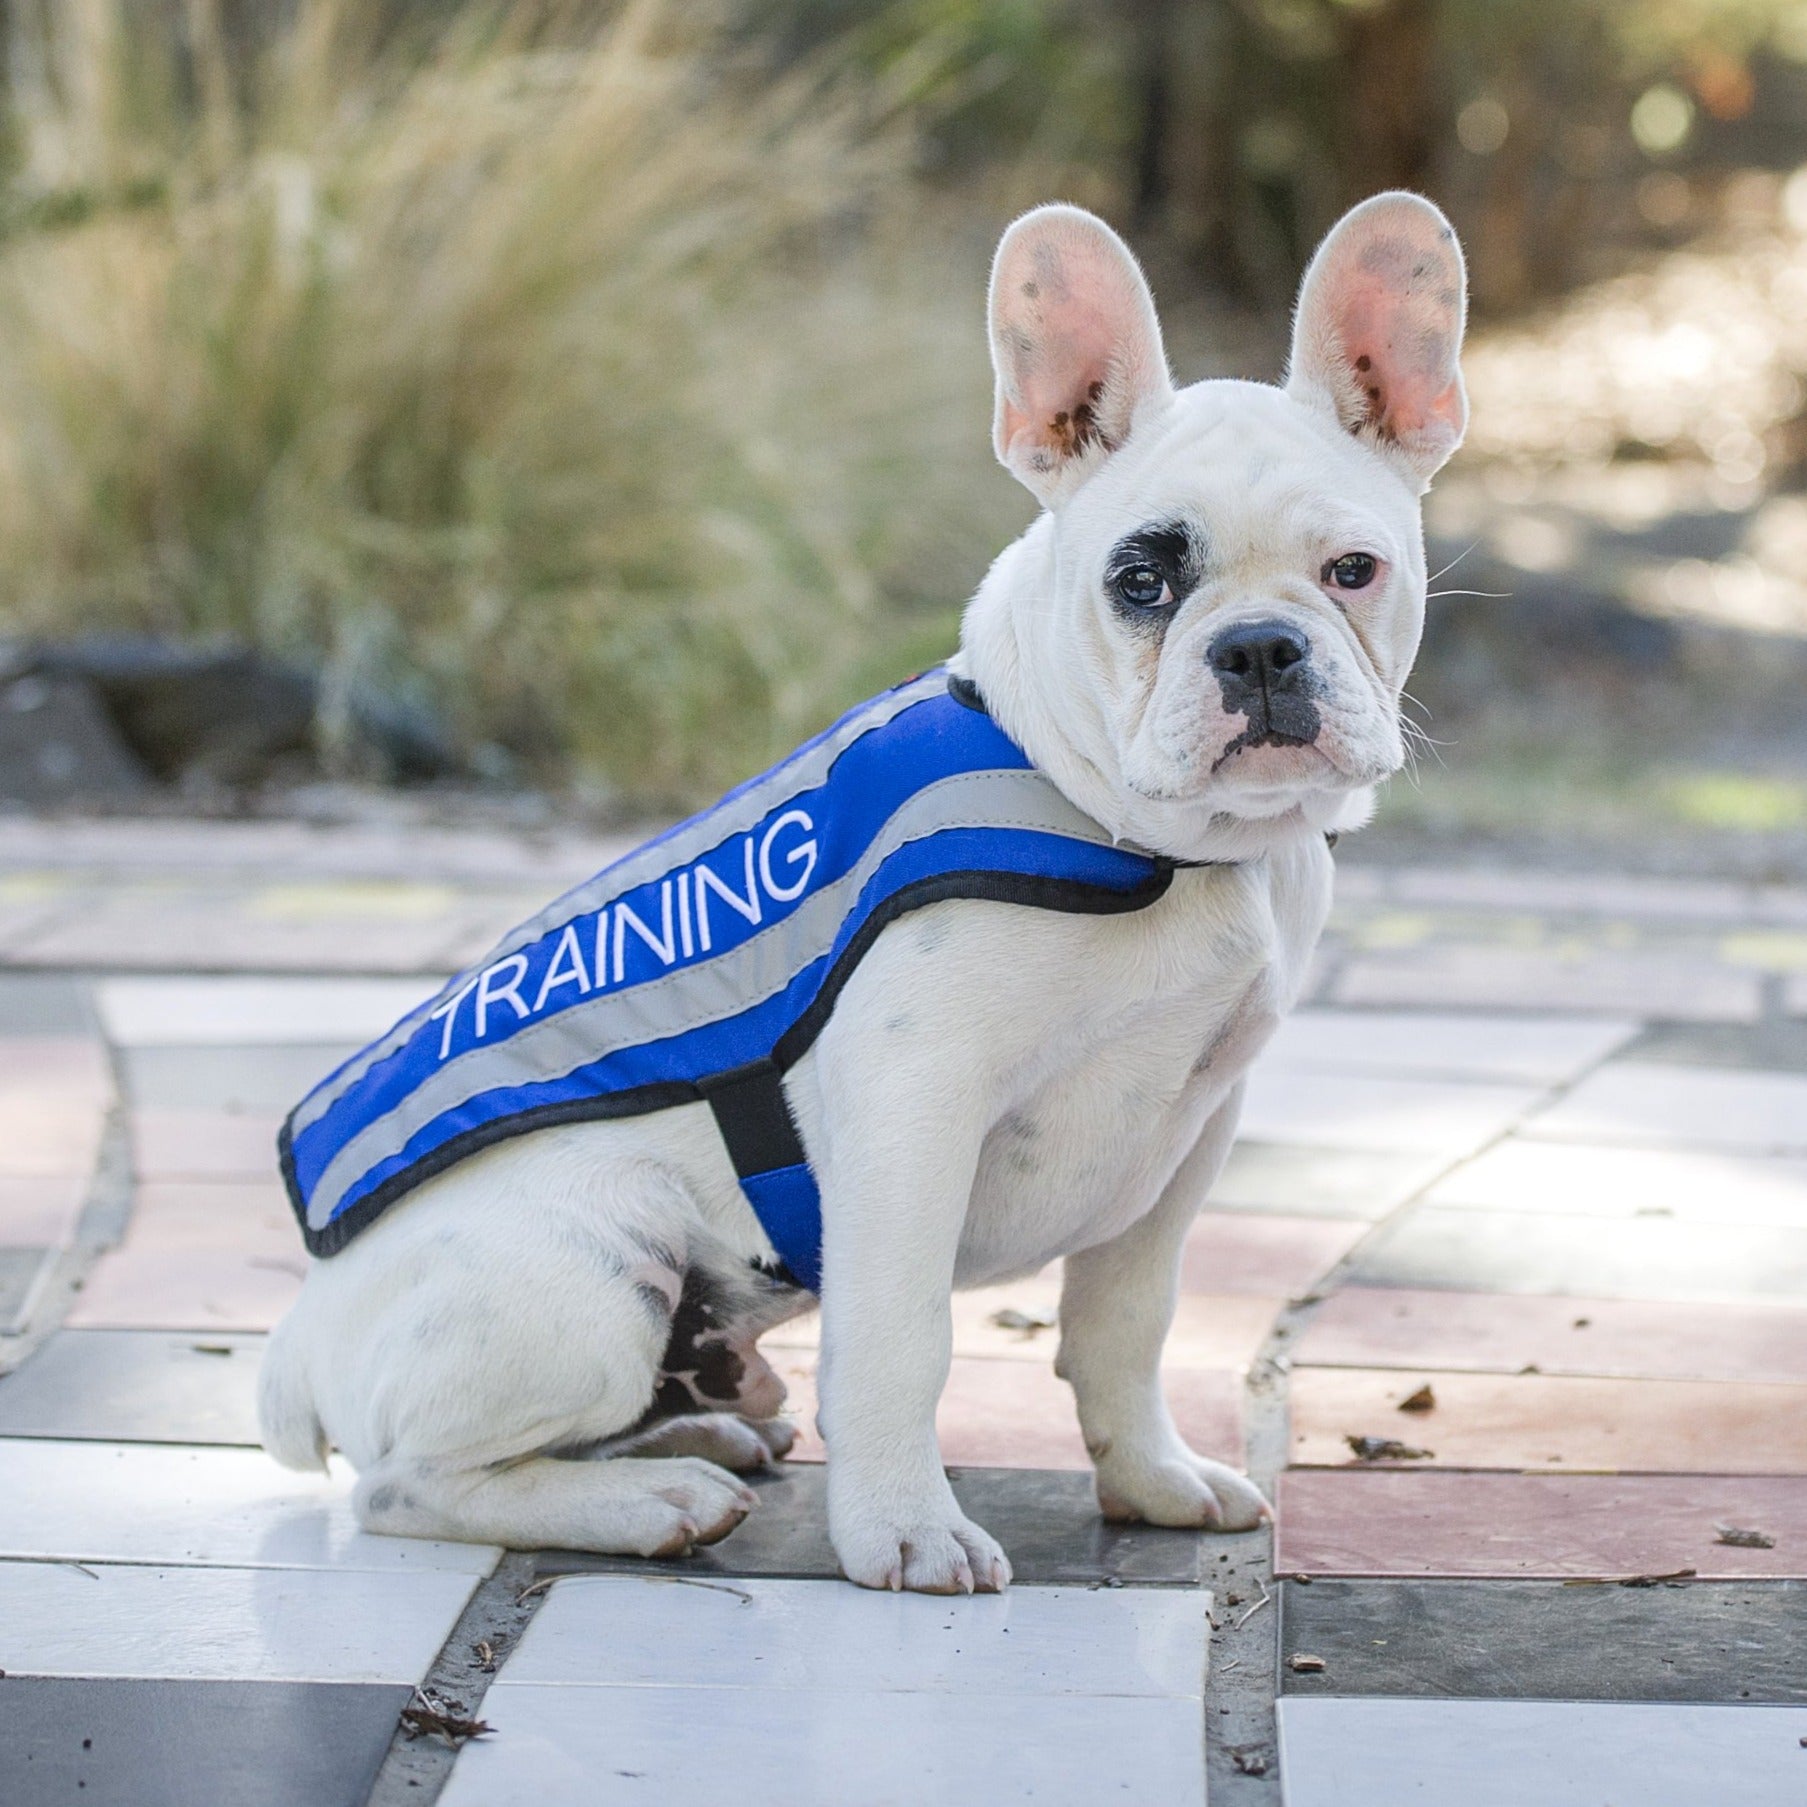 Dexil Friendly Dog Collars Blue TRAINING S/M Reflective Dog Coat